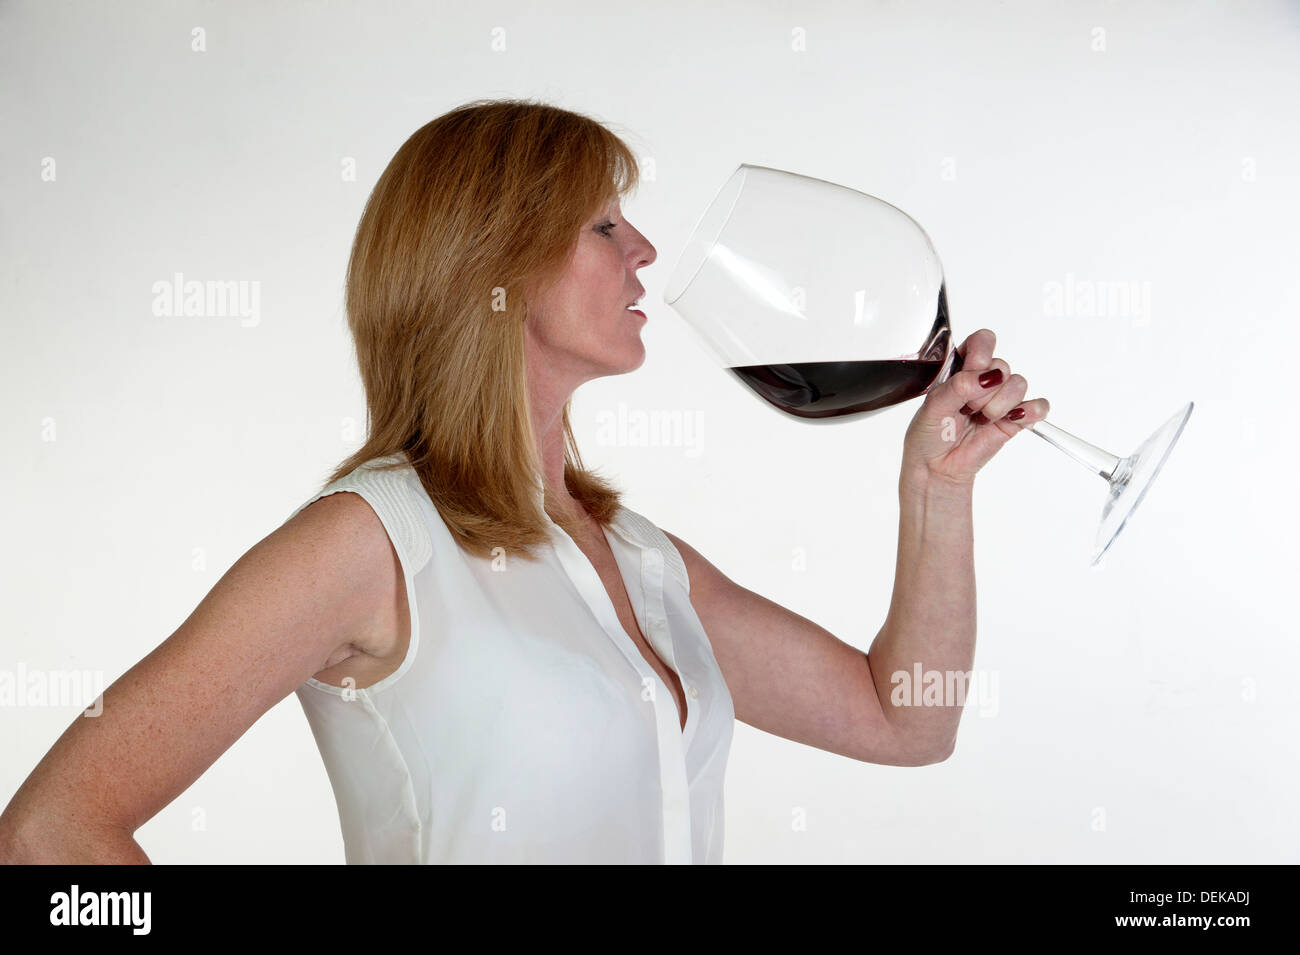 https://c8.alamy.com/comp/DEKADJ/woman-tasting-from-a-very-large-glass-of-red-wine-DEKADJ.jpg